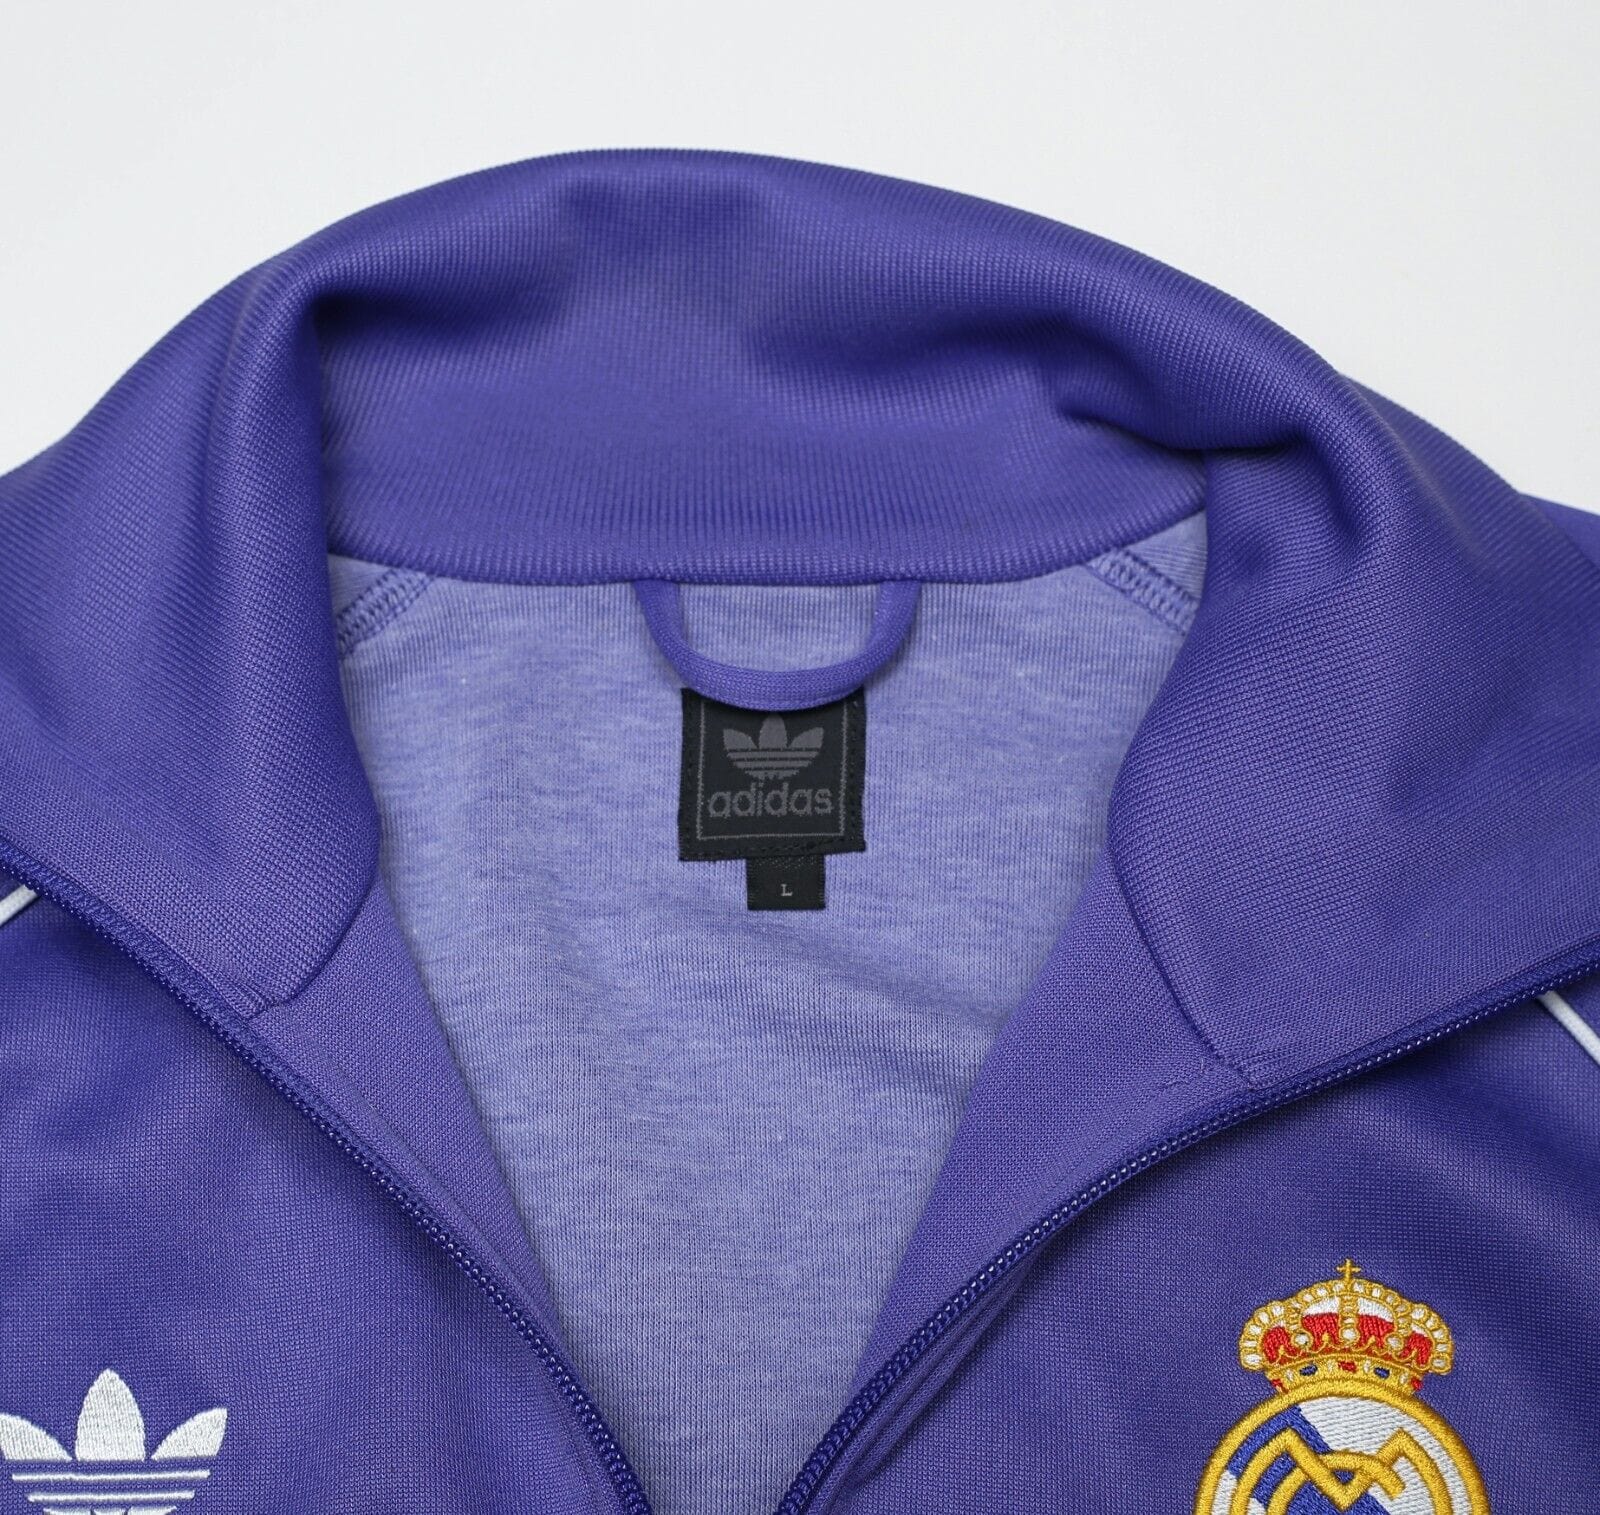 1980's Style REAL MADRID adidas Originals Football Jacket Track Top (L)